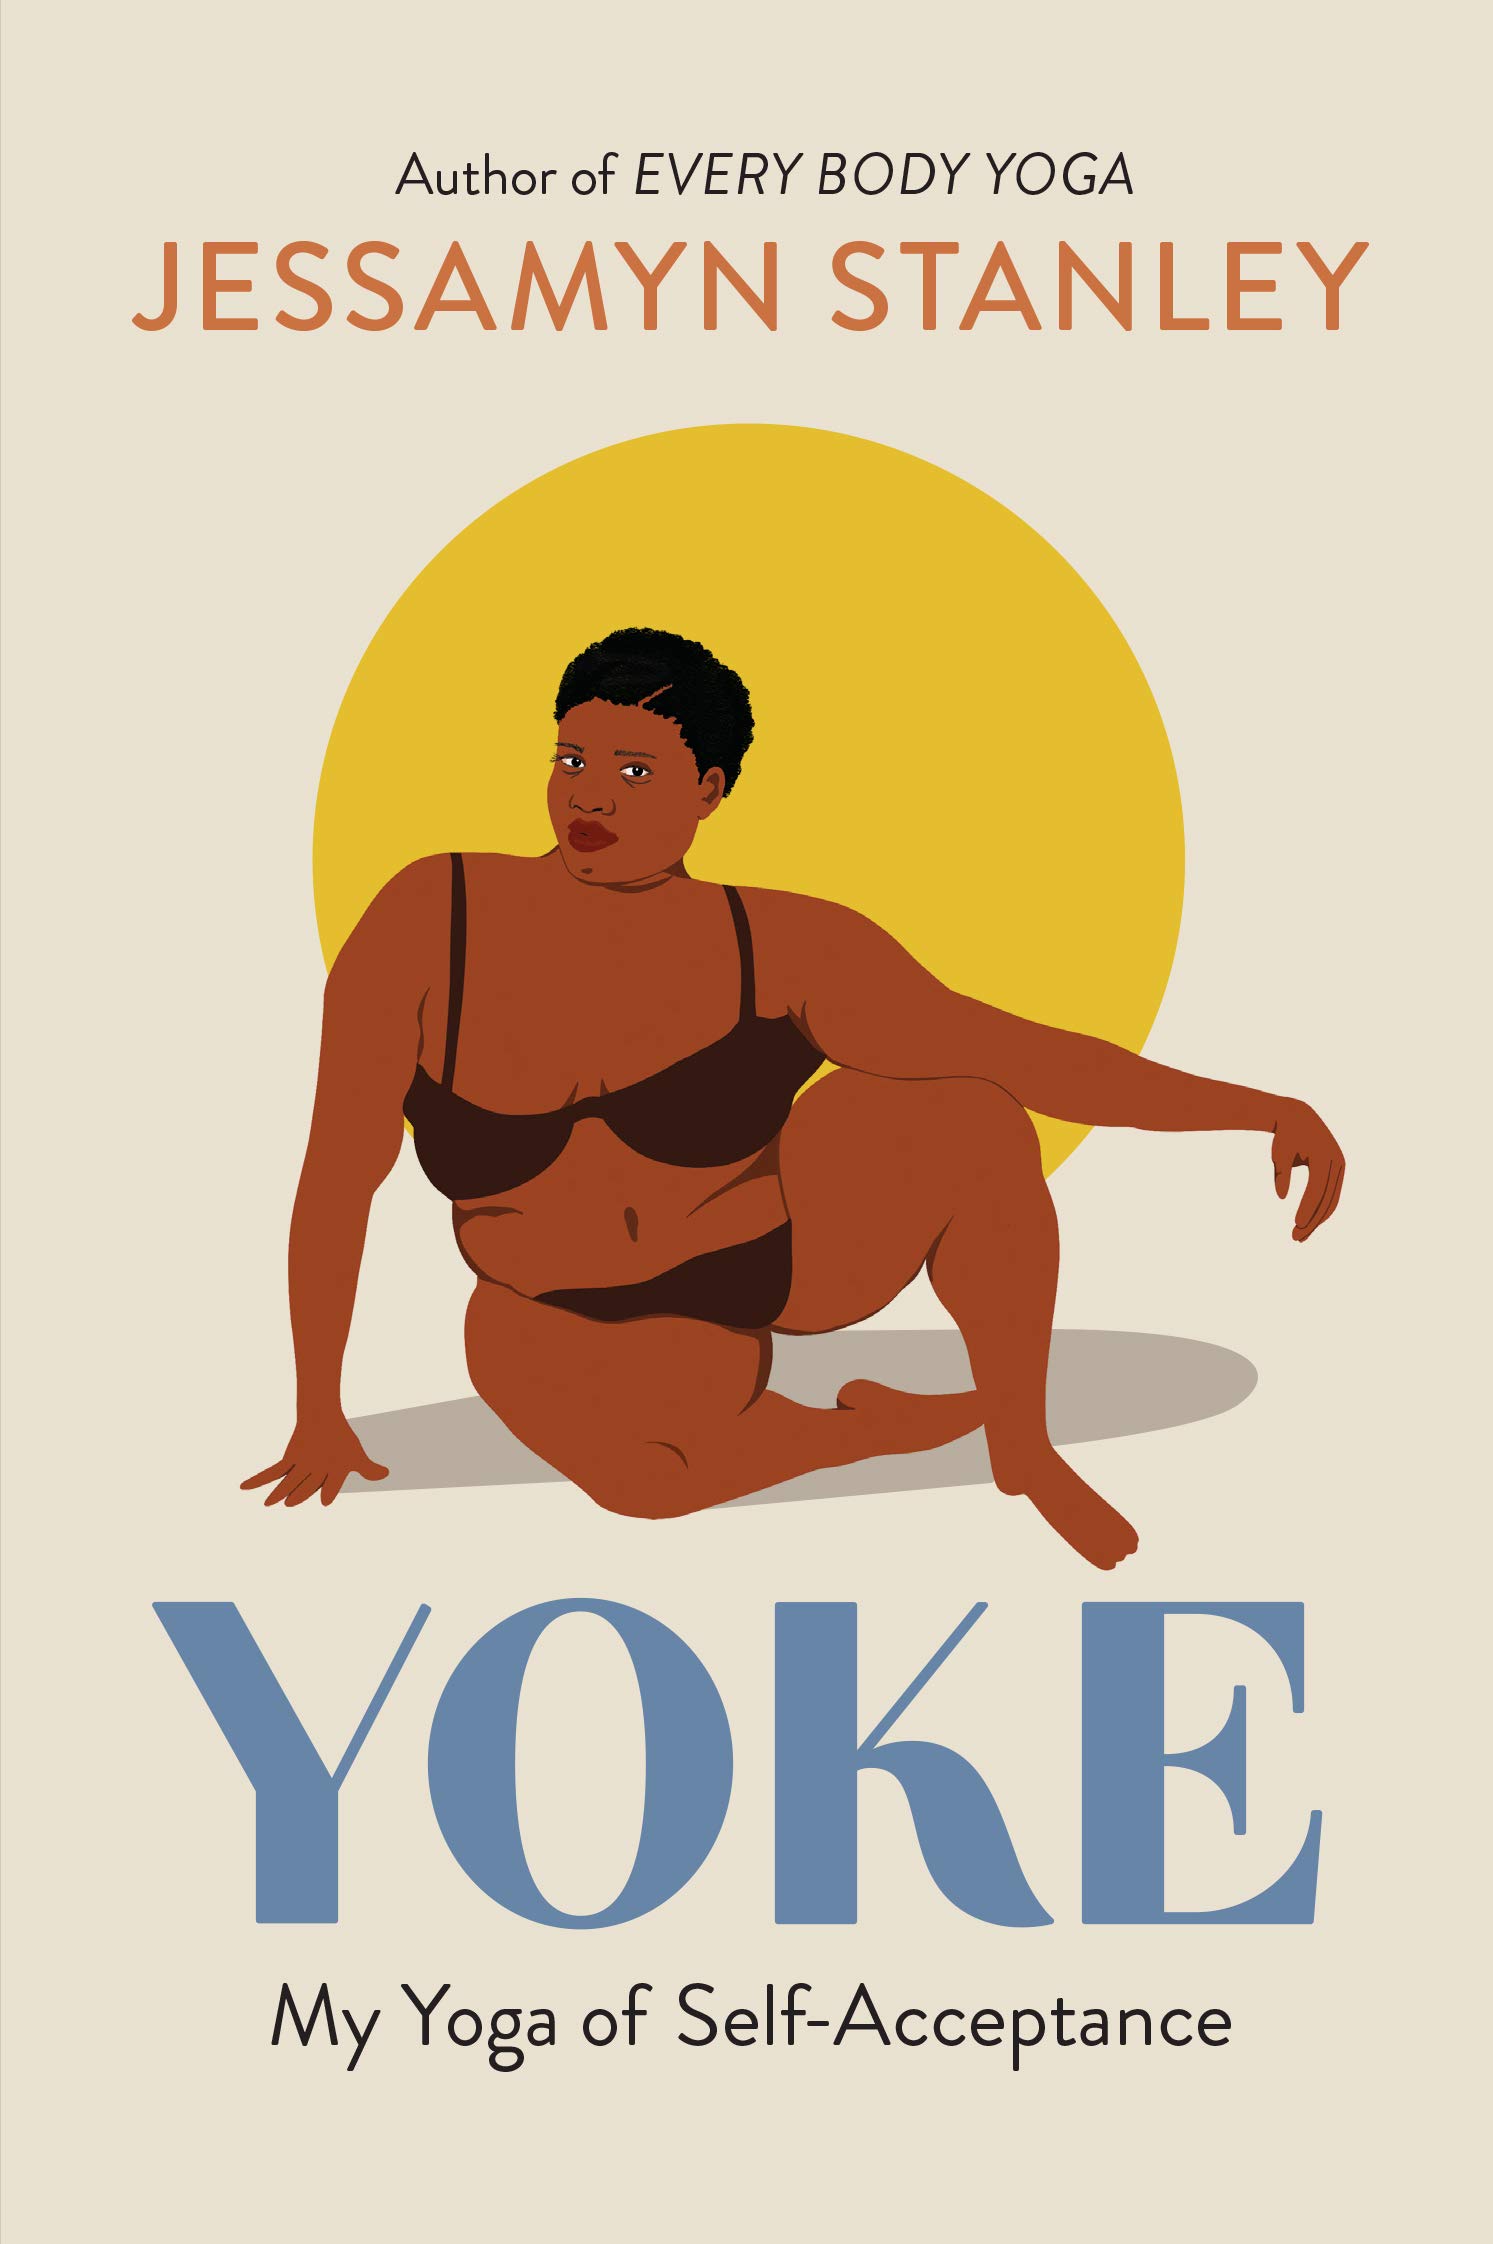 Yoke: my yoga of self acceptance